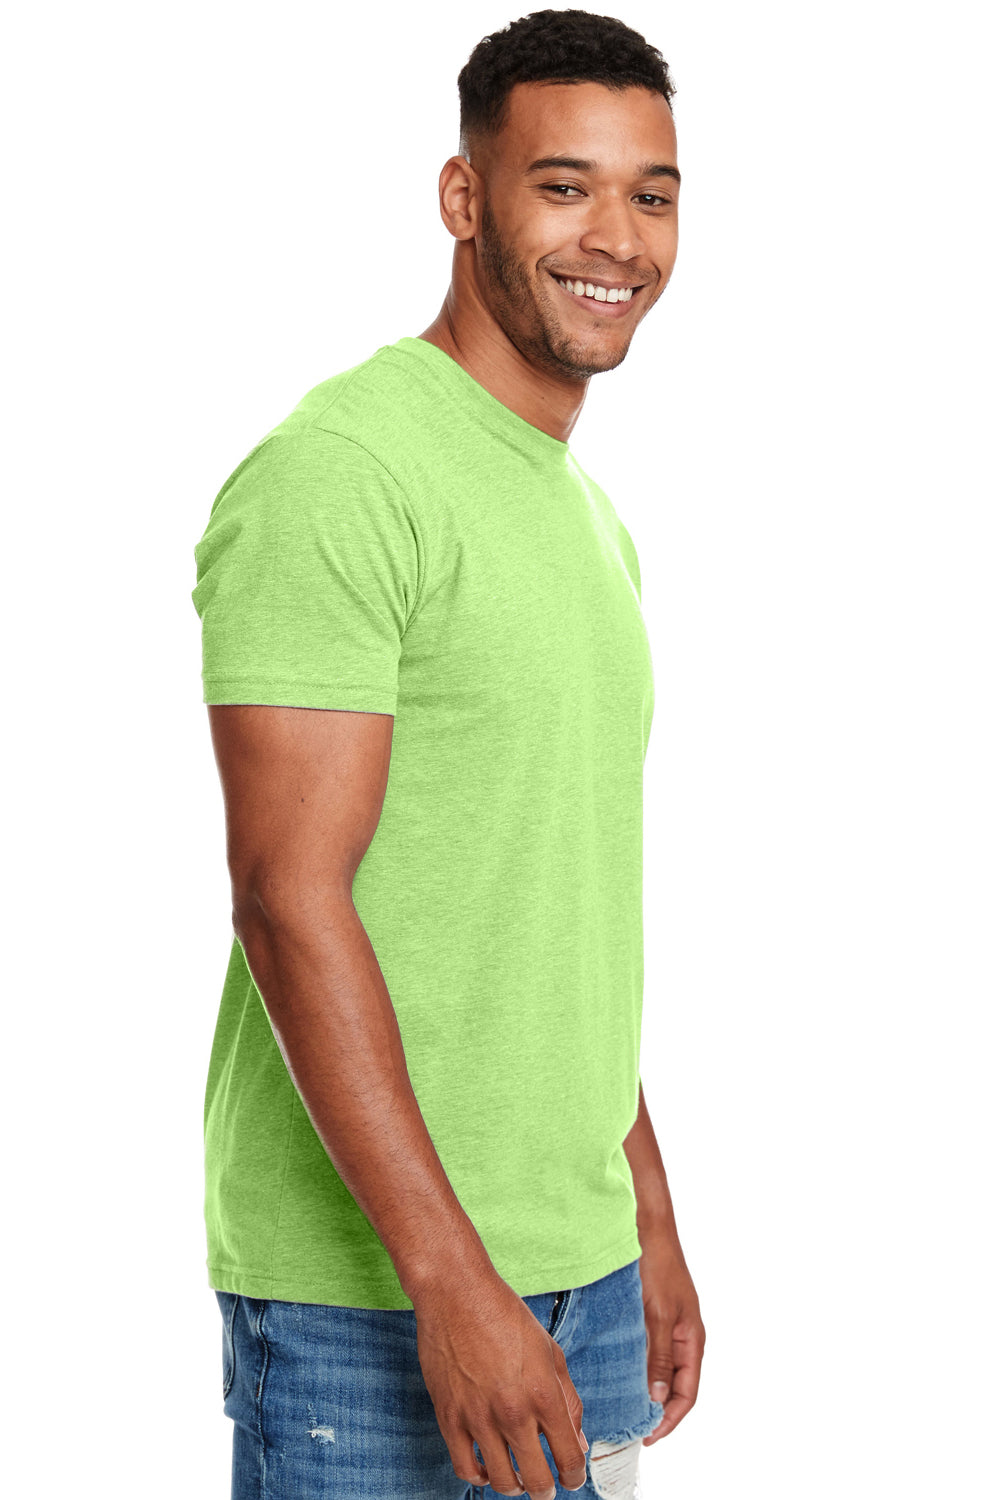 Next Level N6210 Mens CVC Jersey Short Sleeve Crewneck T-Shirt Heather Neon Green Side